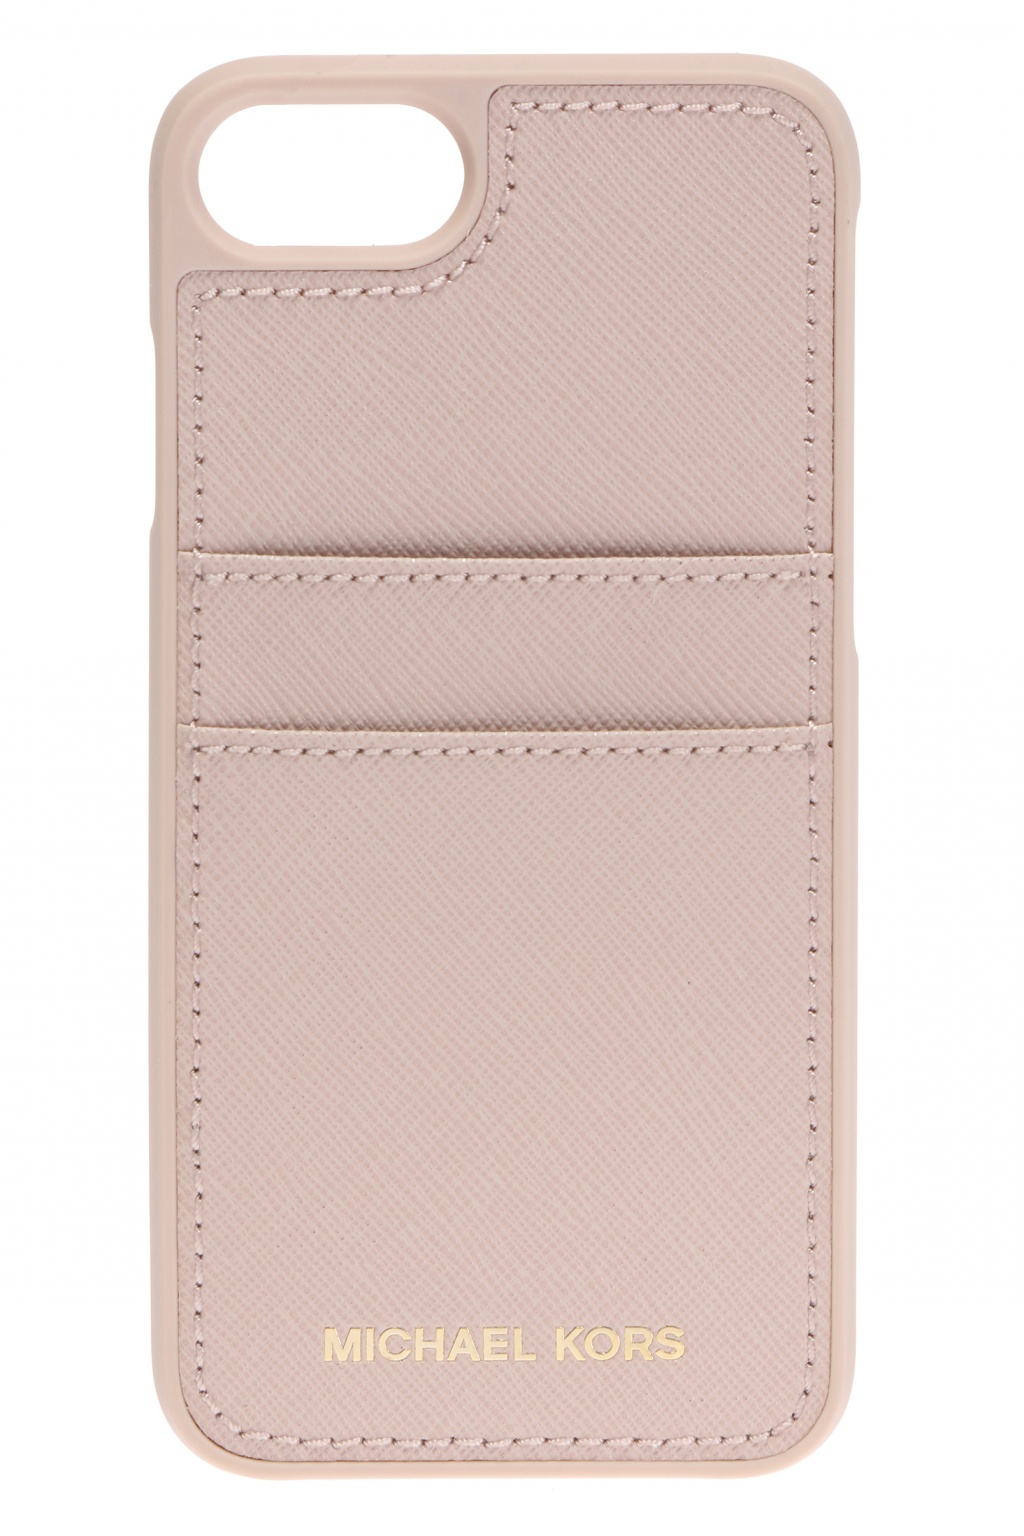 Gentleman vriendelijk poeder Verzorger Pink iPhone 7 case with pockets Michael Michael Kors - Vitkac France